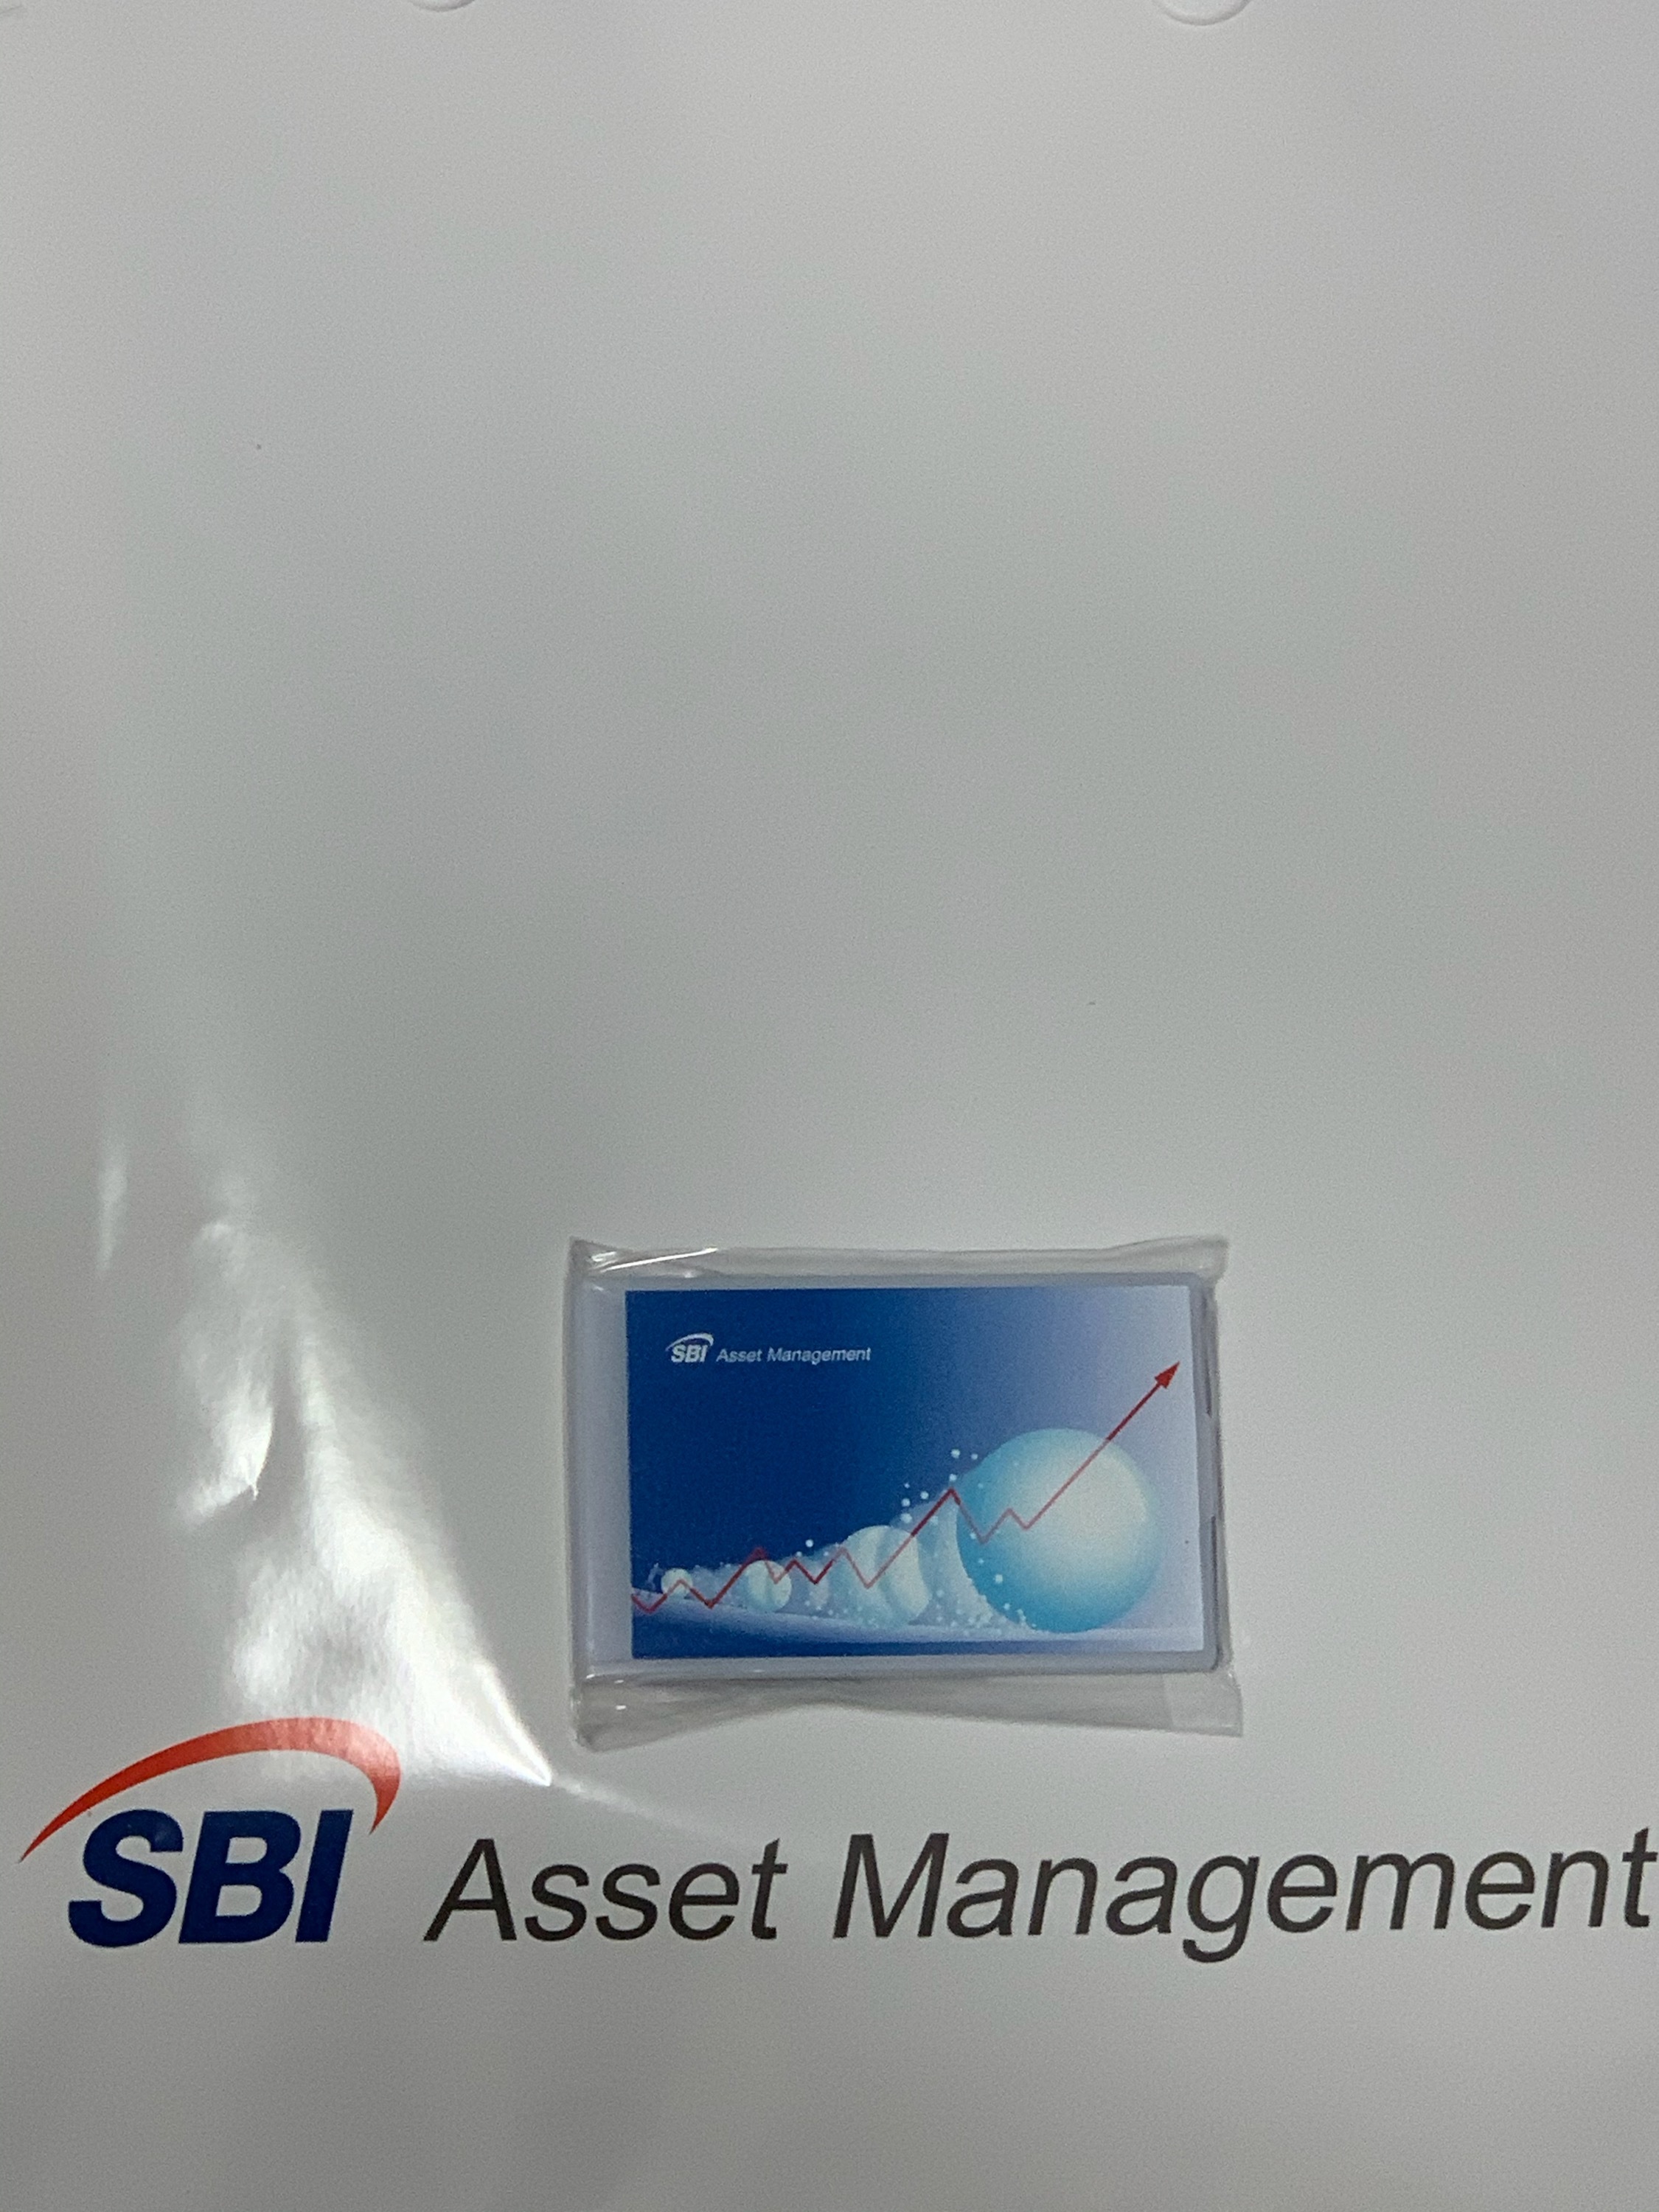 SBI_Asset_Management.jpg